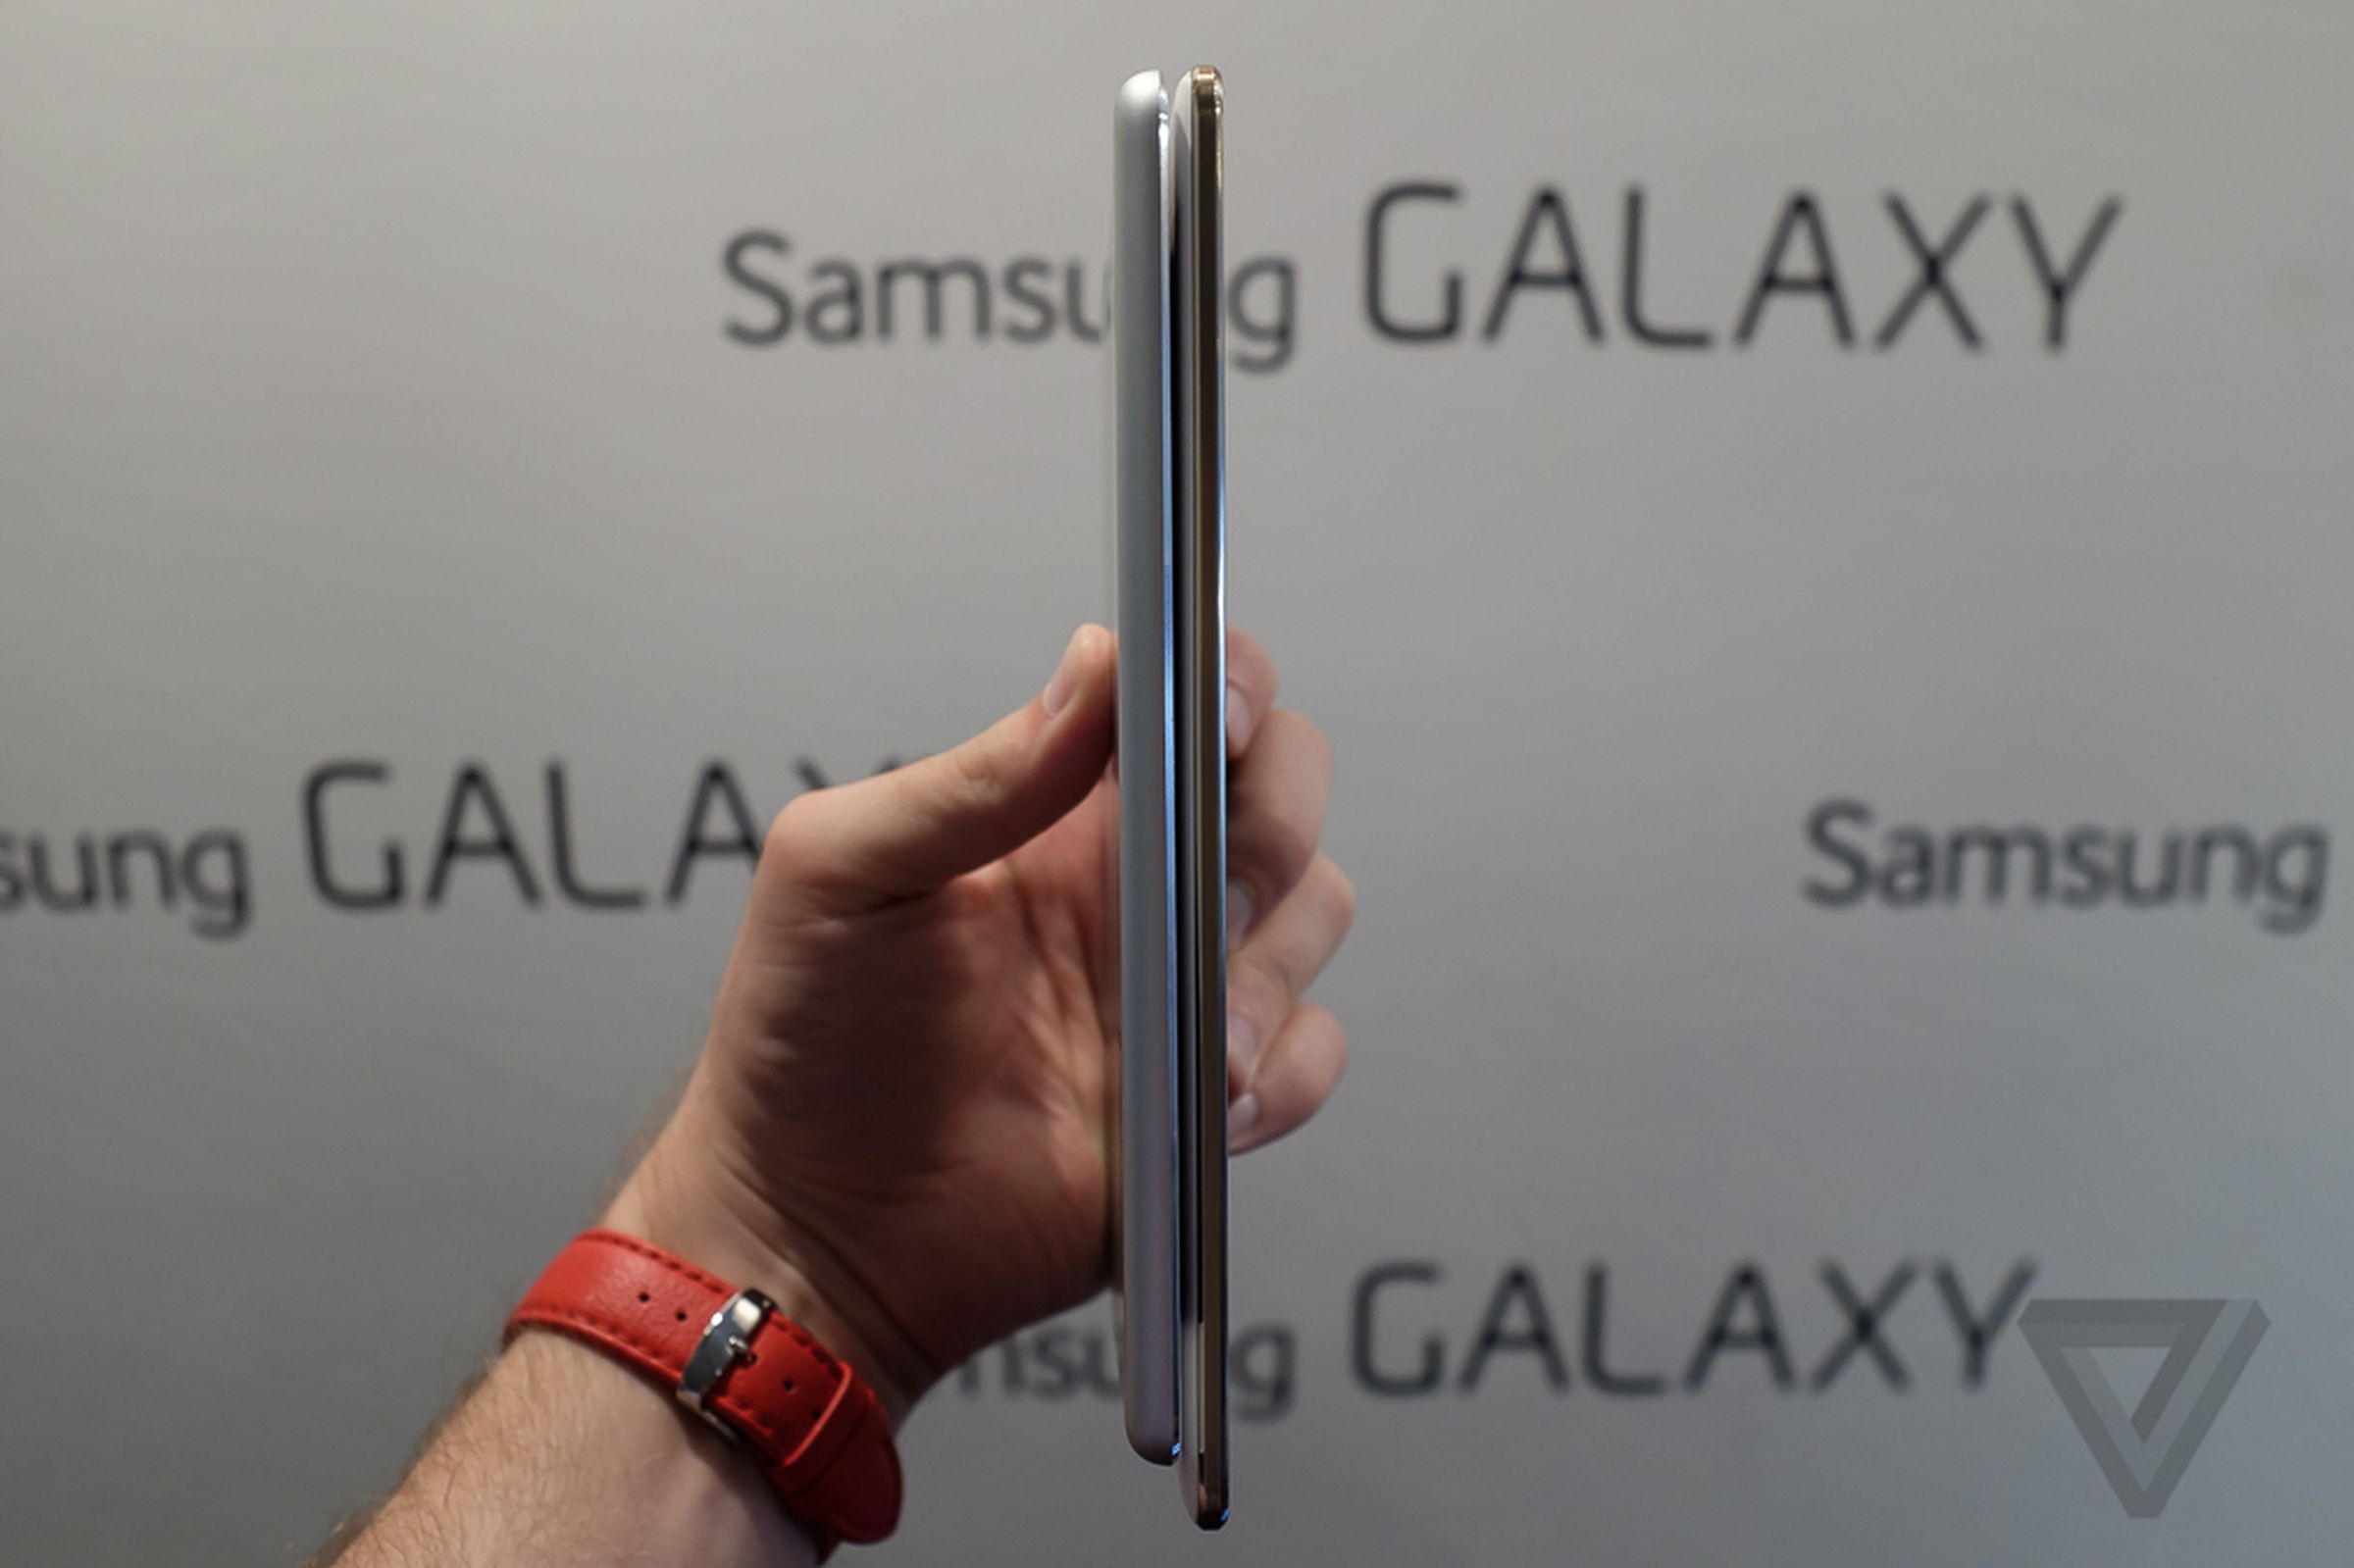 Samsung Galaxy Tab S hands-on photos